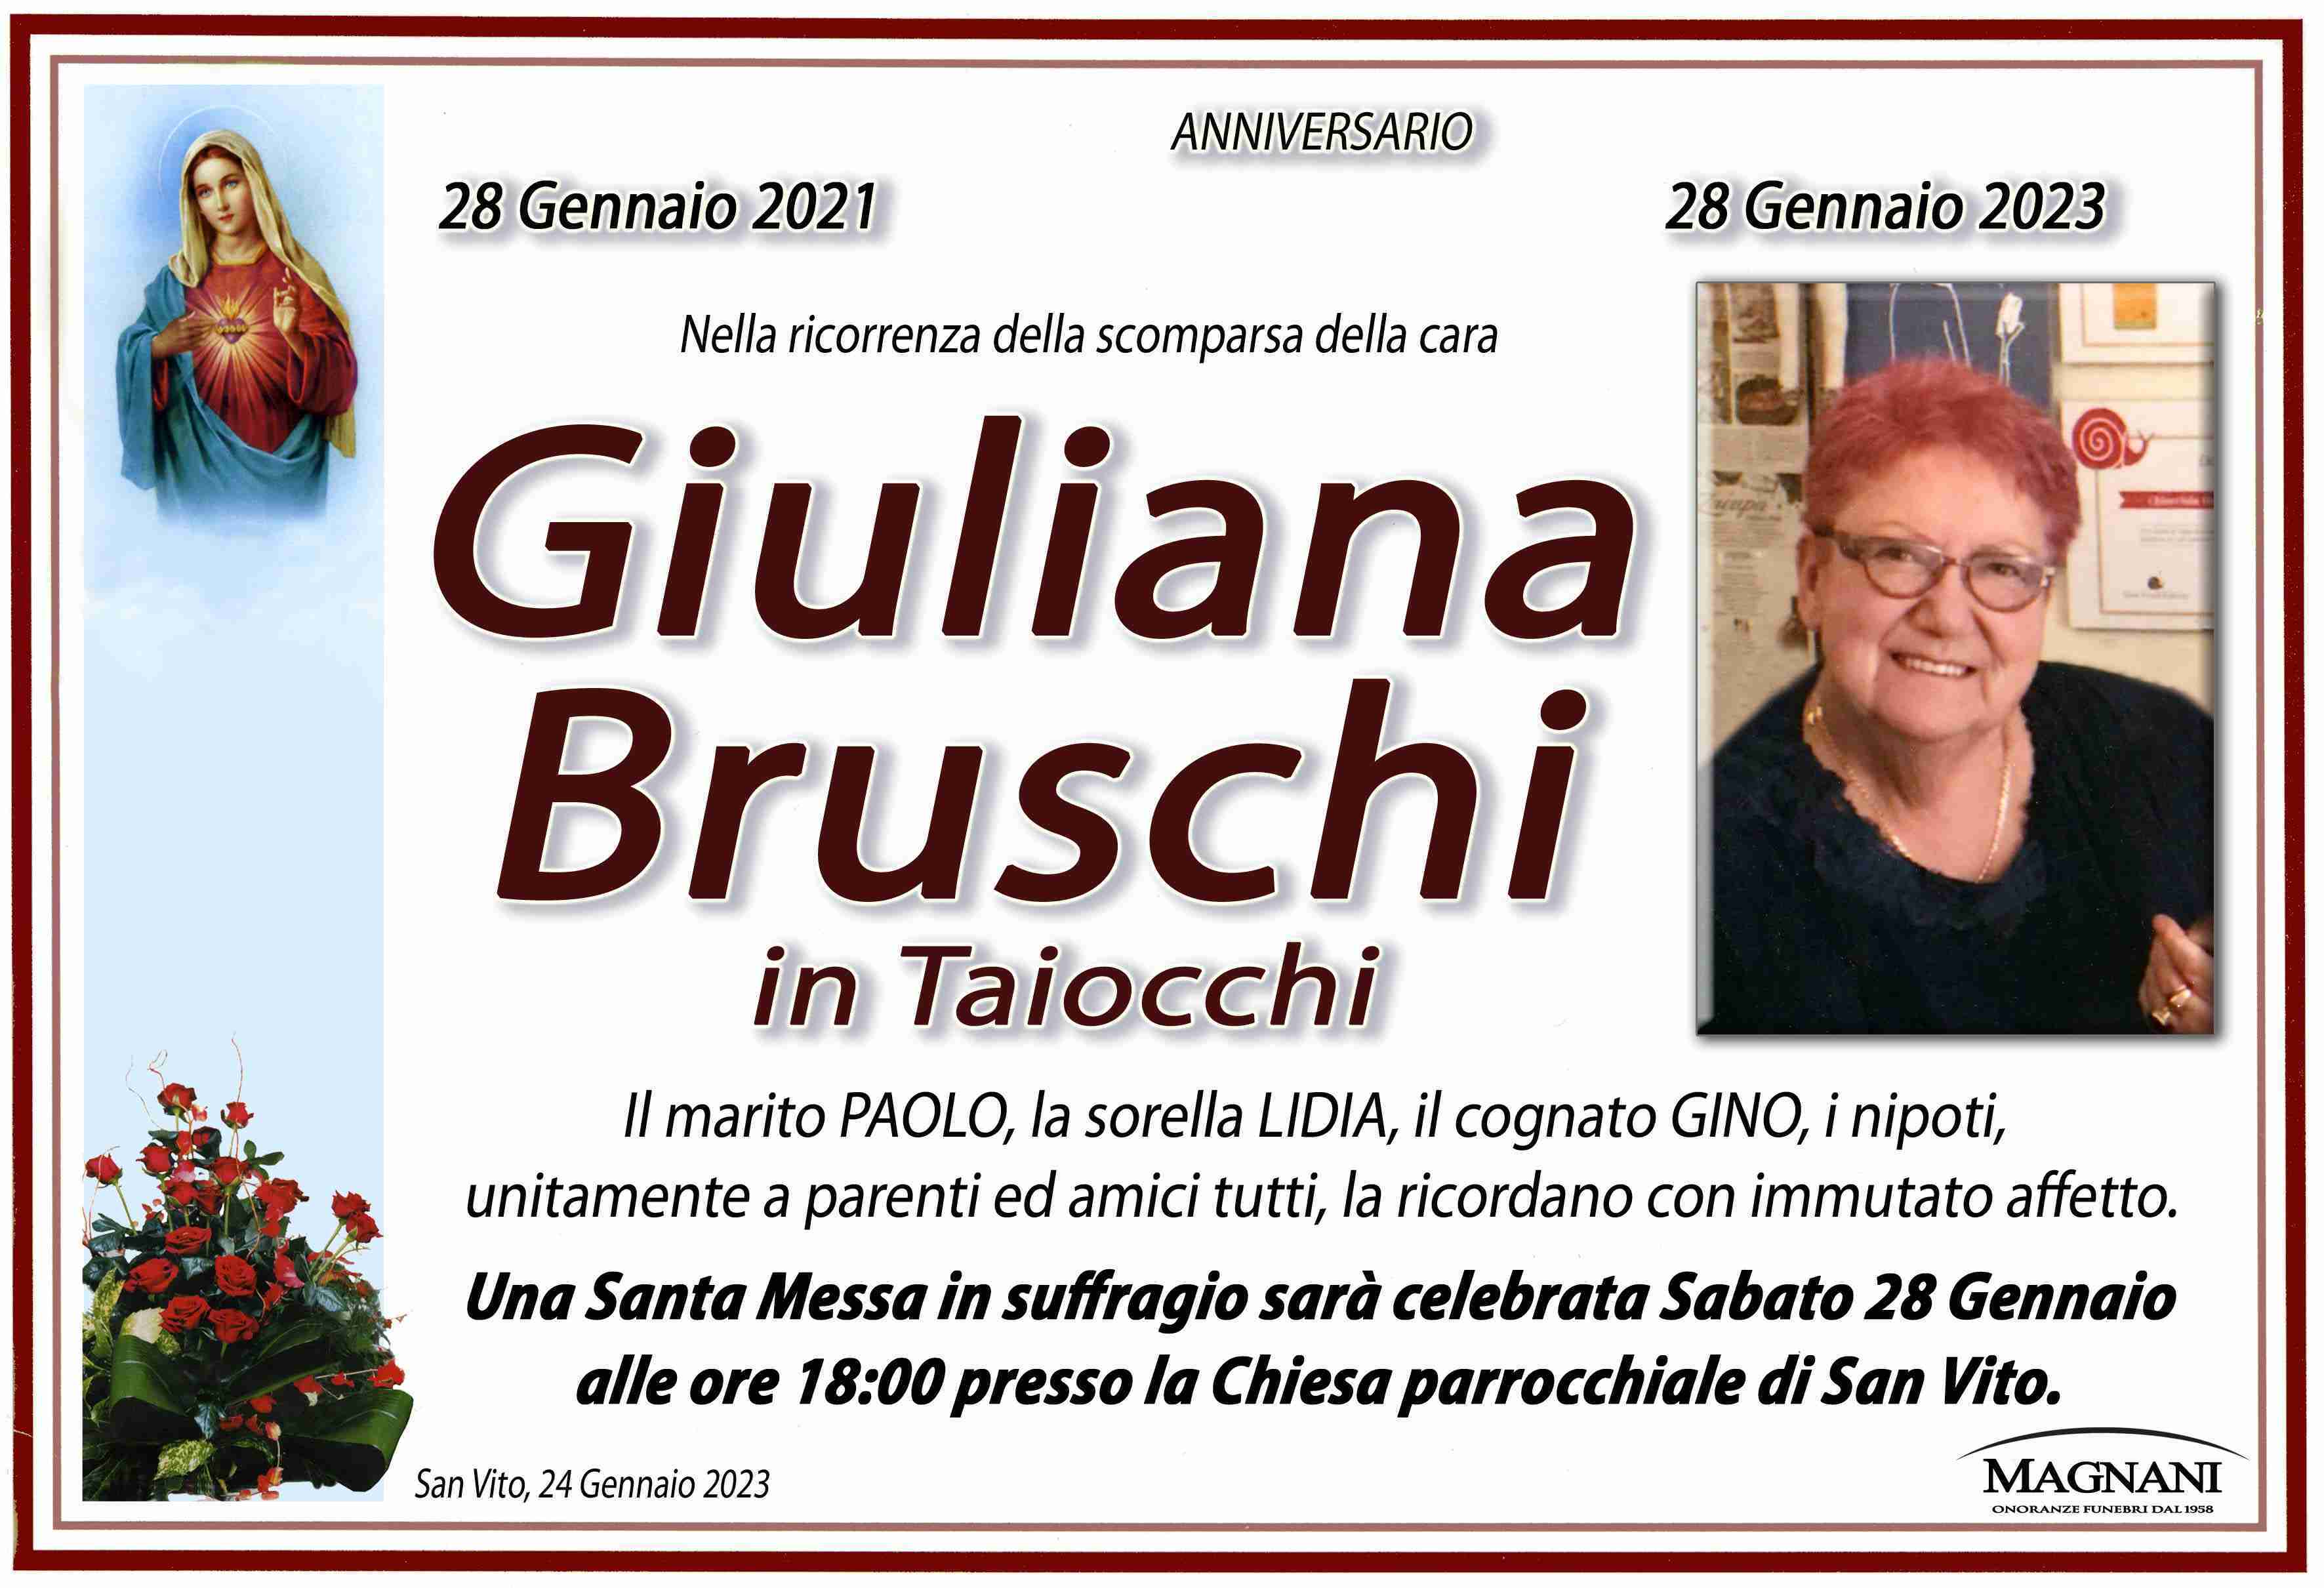 Giuliana Bruschi